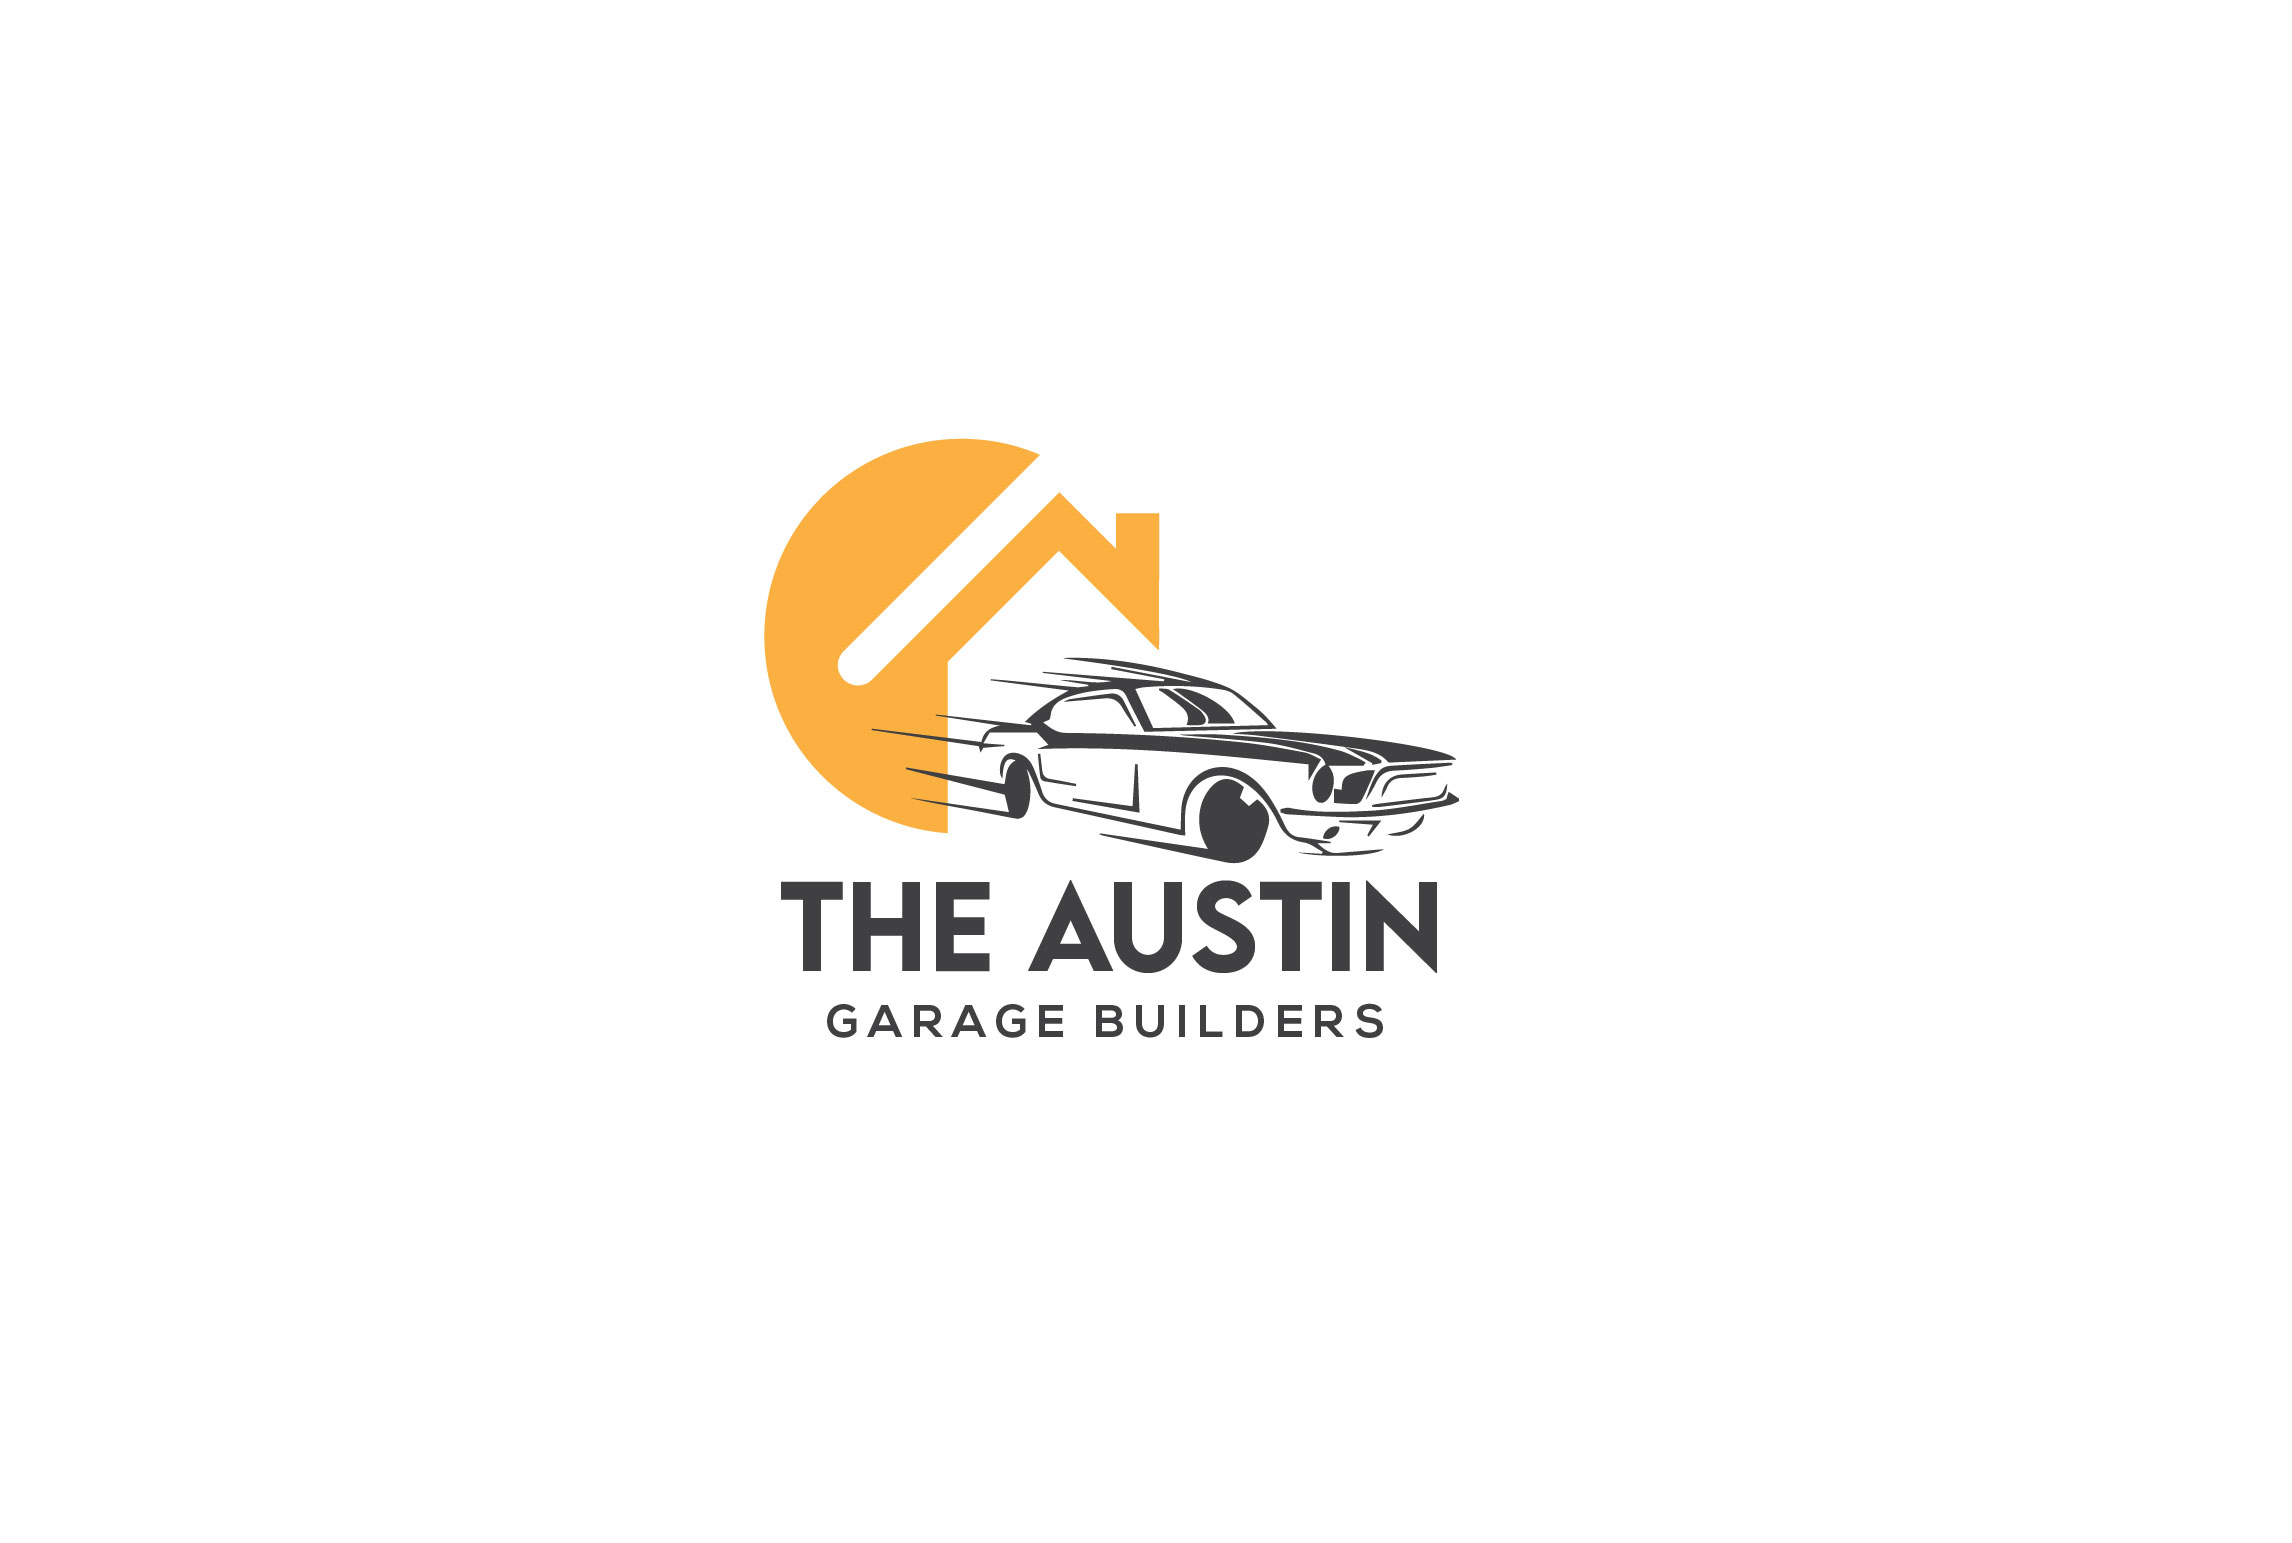 The Austin Garage builders